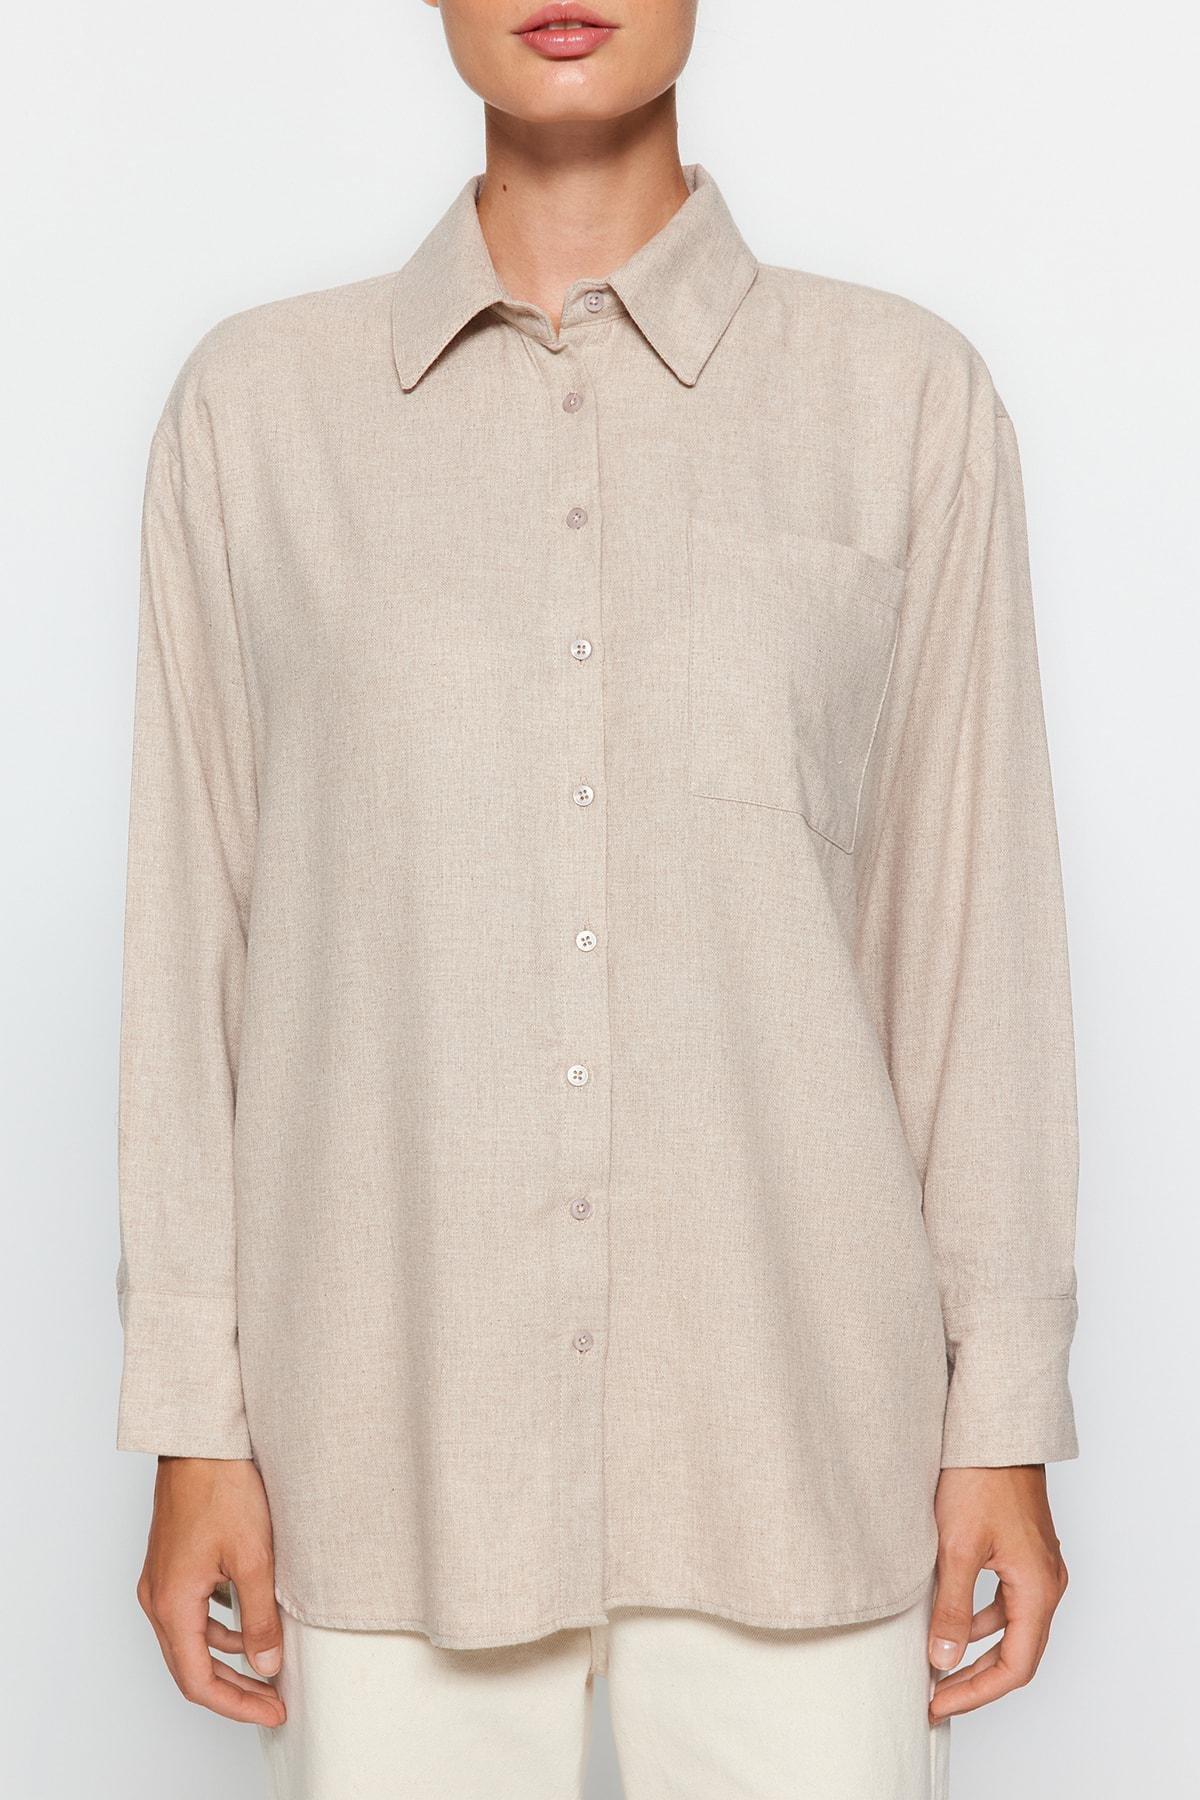 Trendyol - Brown Oversize Shirt With Brown Pocket